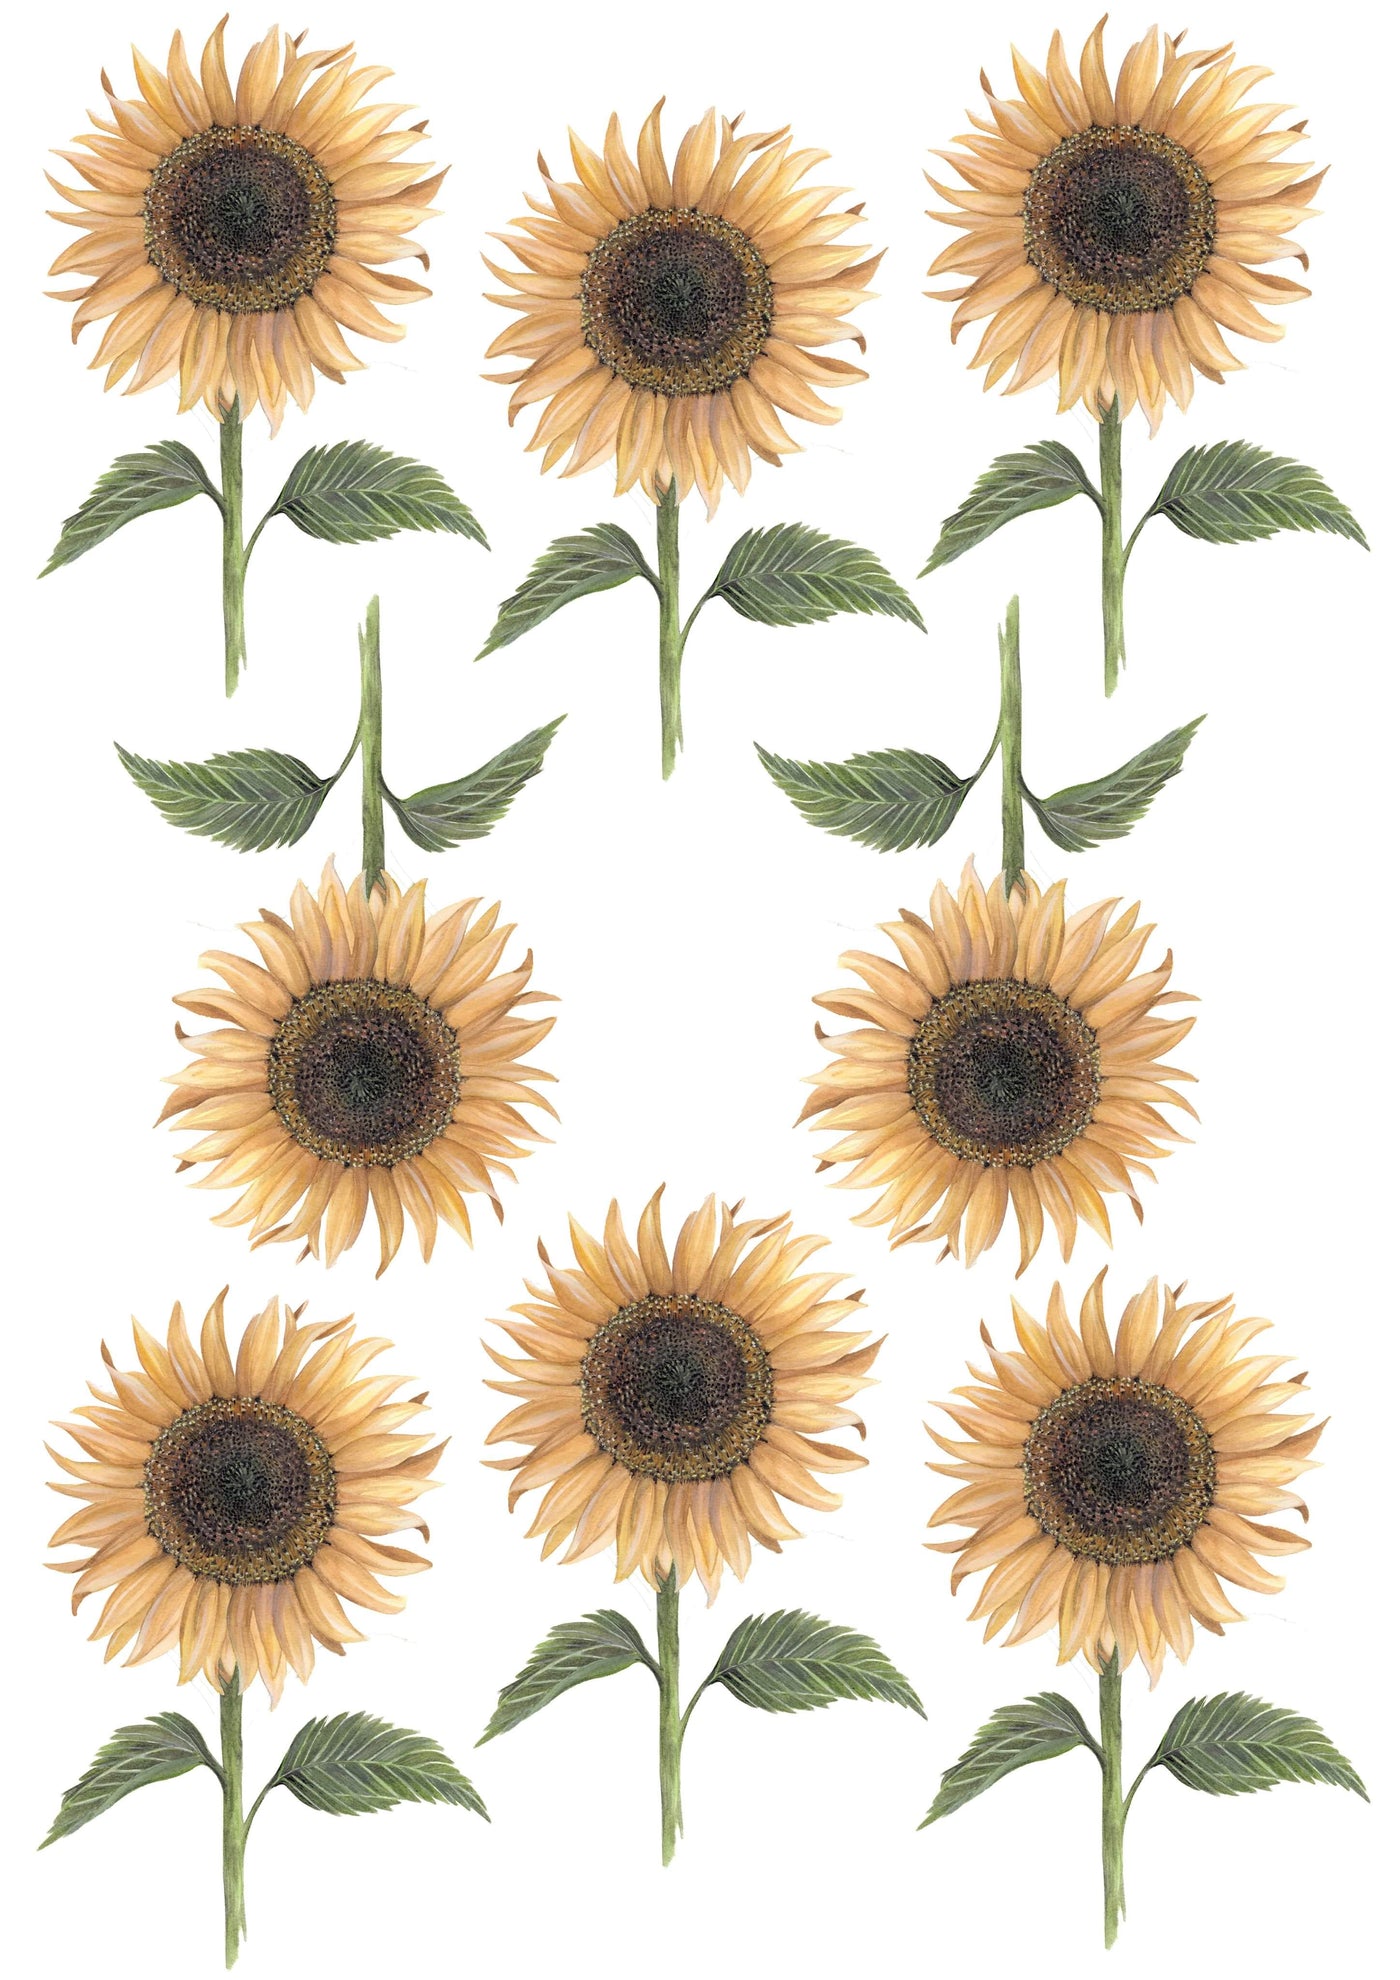 Sale Floral & Fern Sunflower Wall Decals